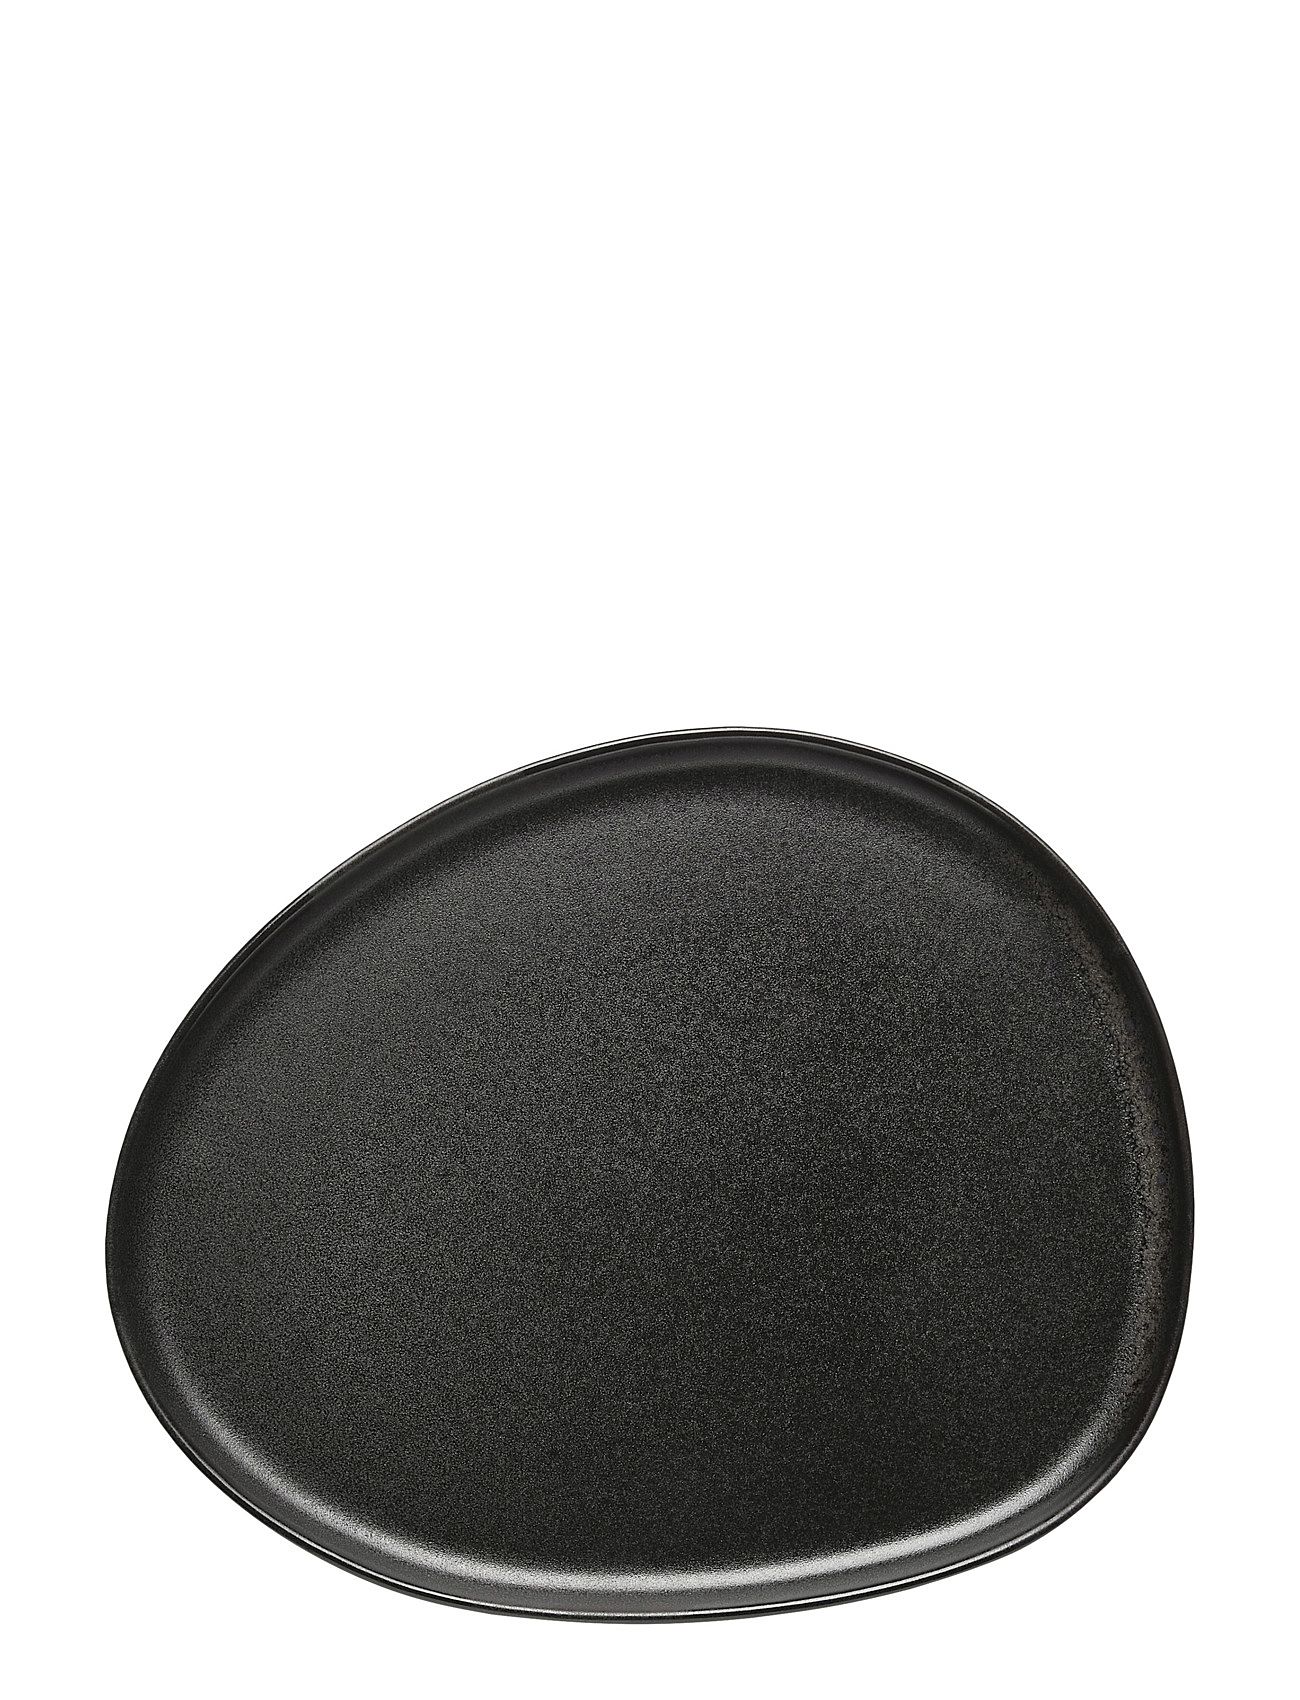 Raw Organic Titanium Black Home Tableware Serving Dishes Serving Platters Black Aida